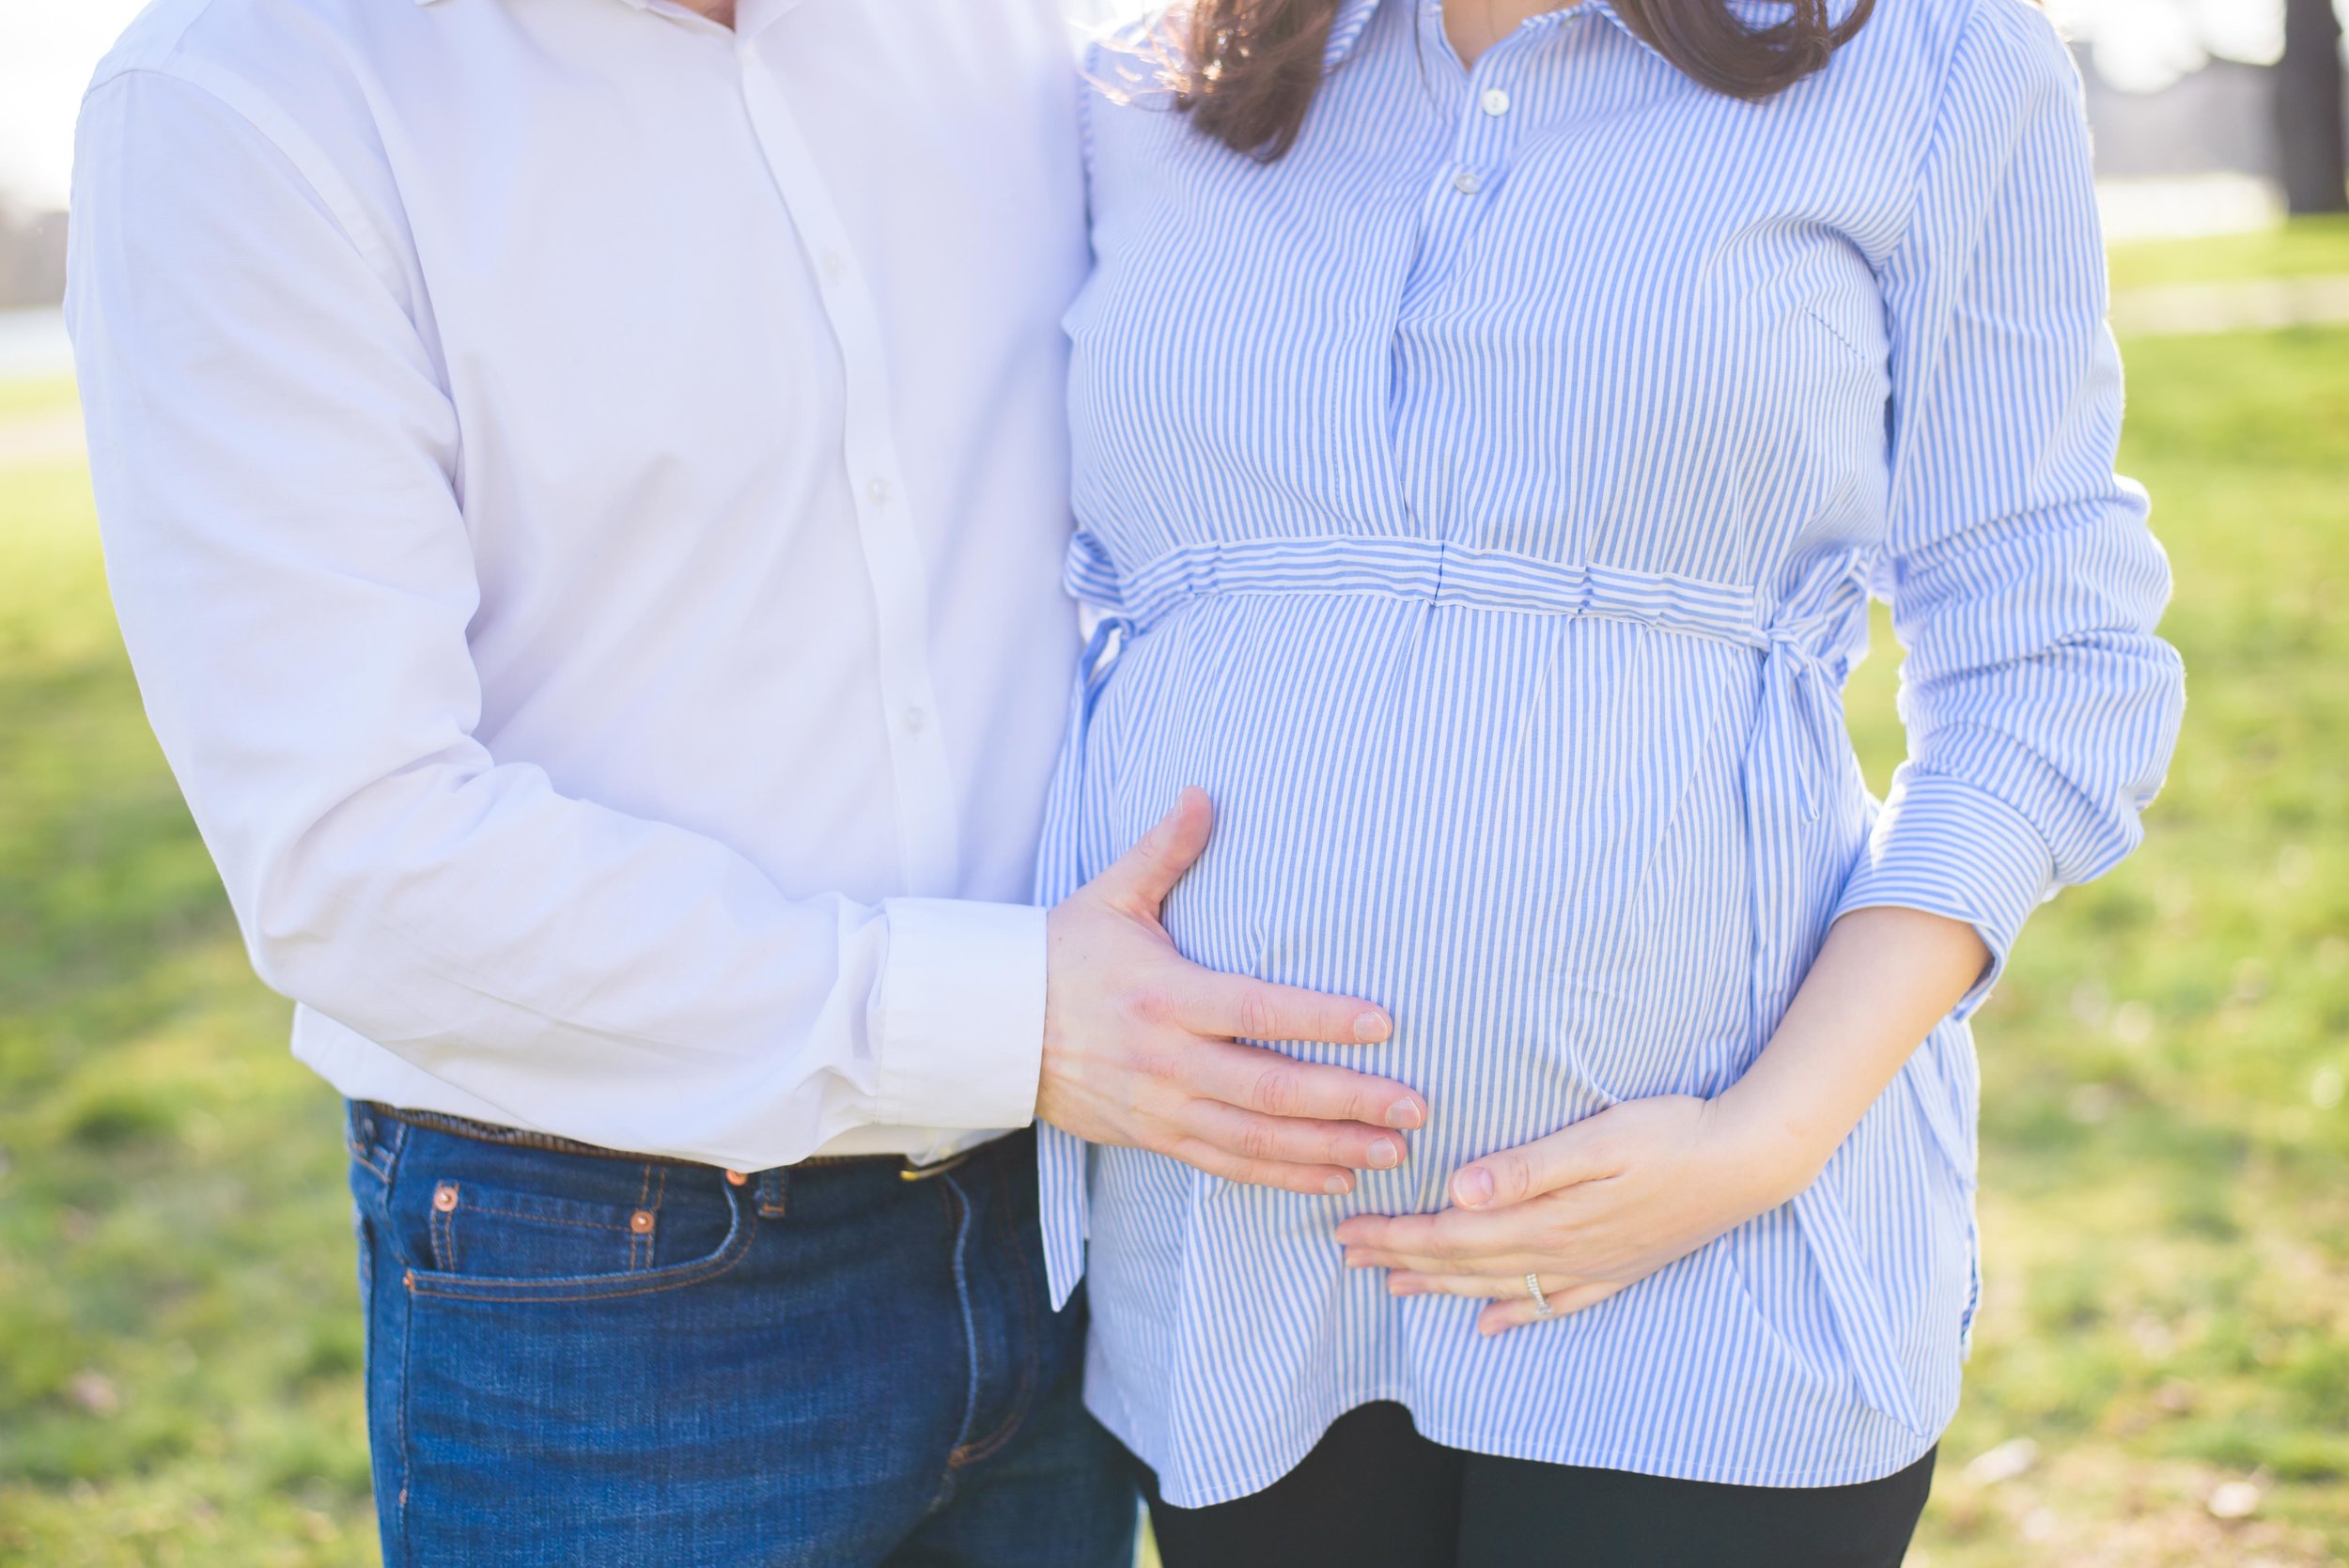 Pregnancy photoshoot with partner